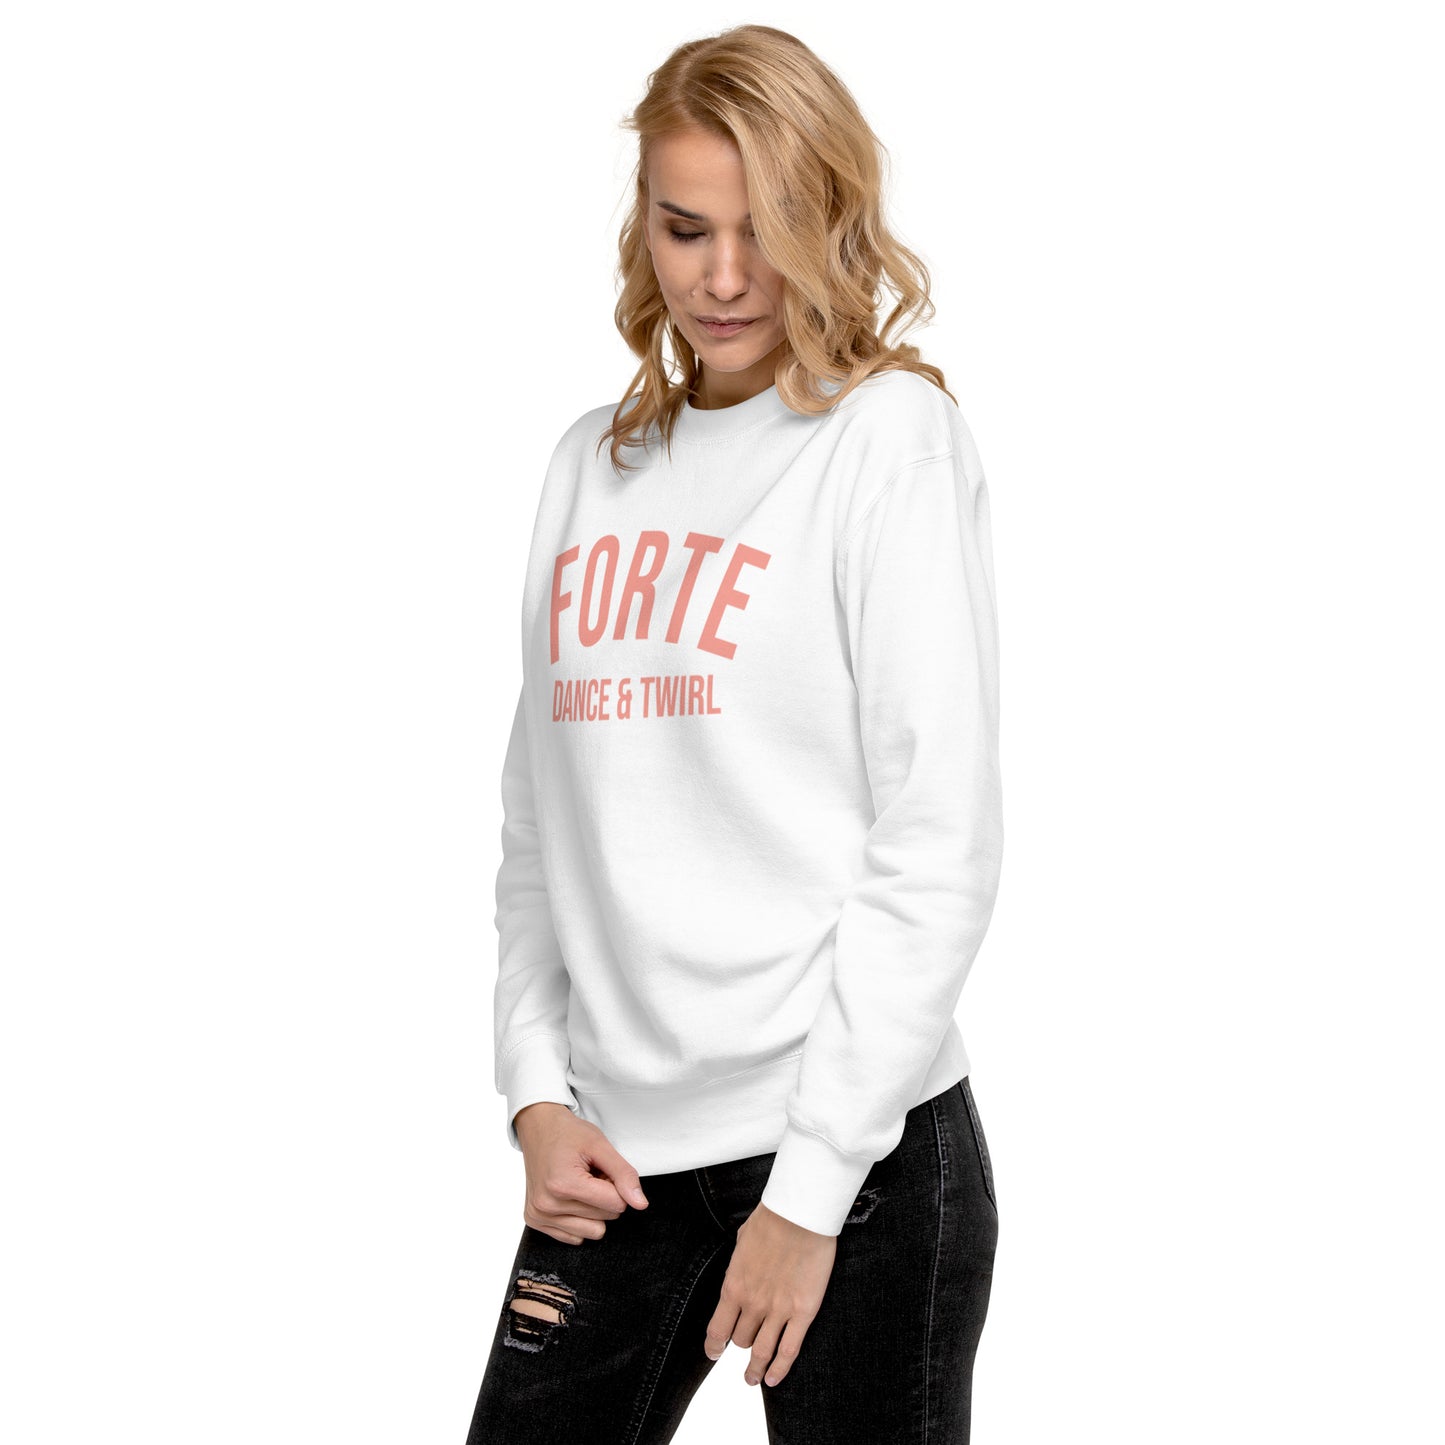 Adult - Cotton Heritage unisex premium sweatshirt